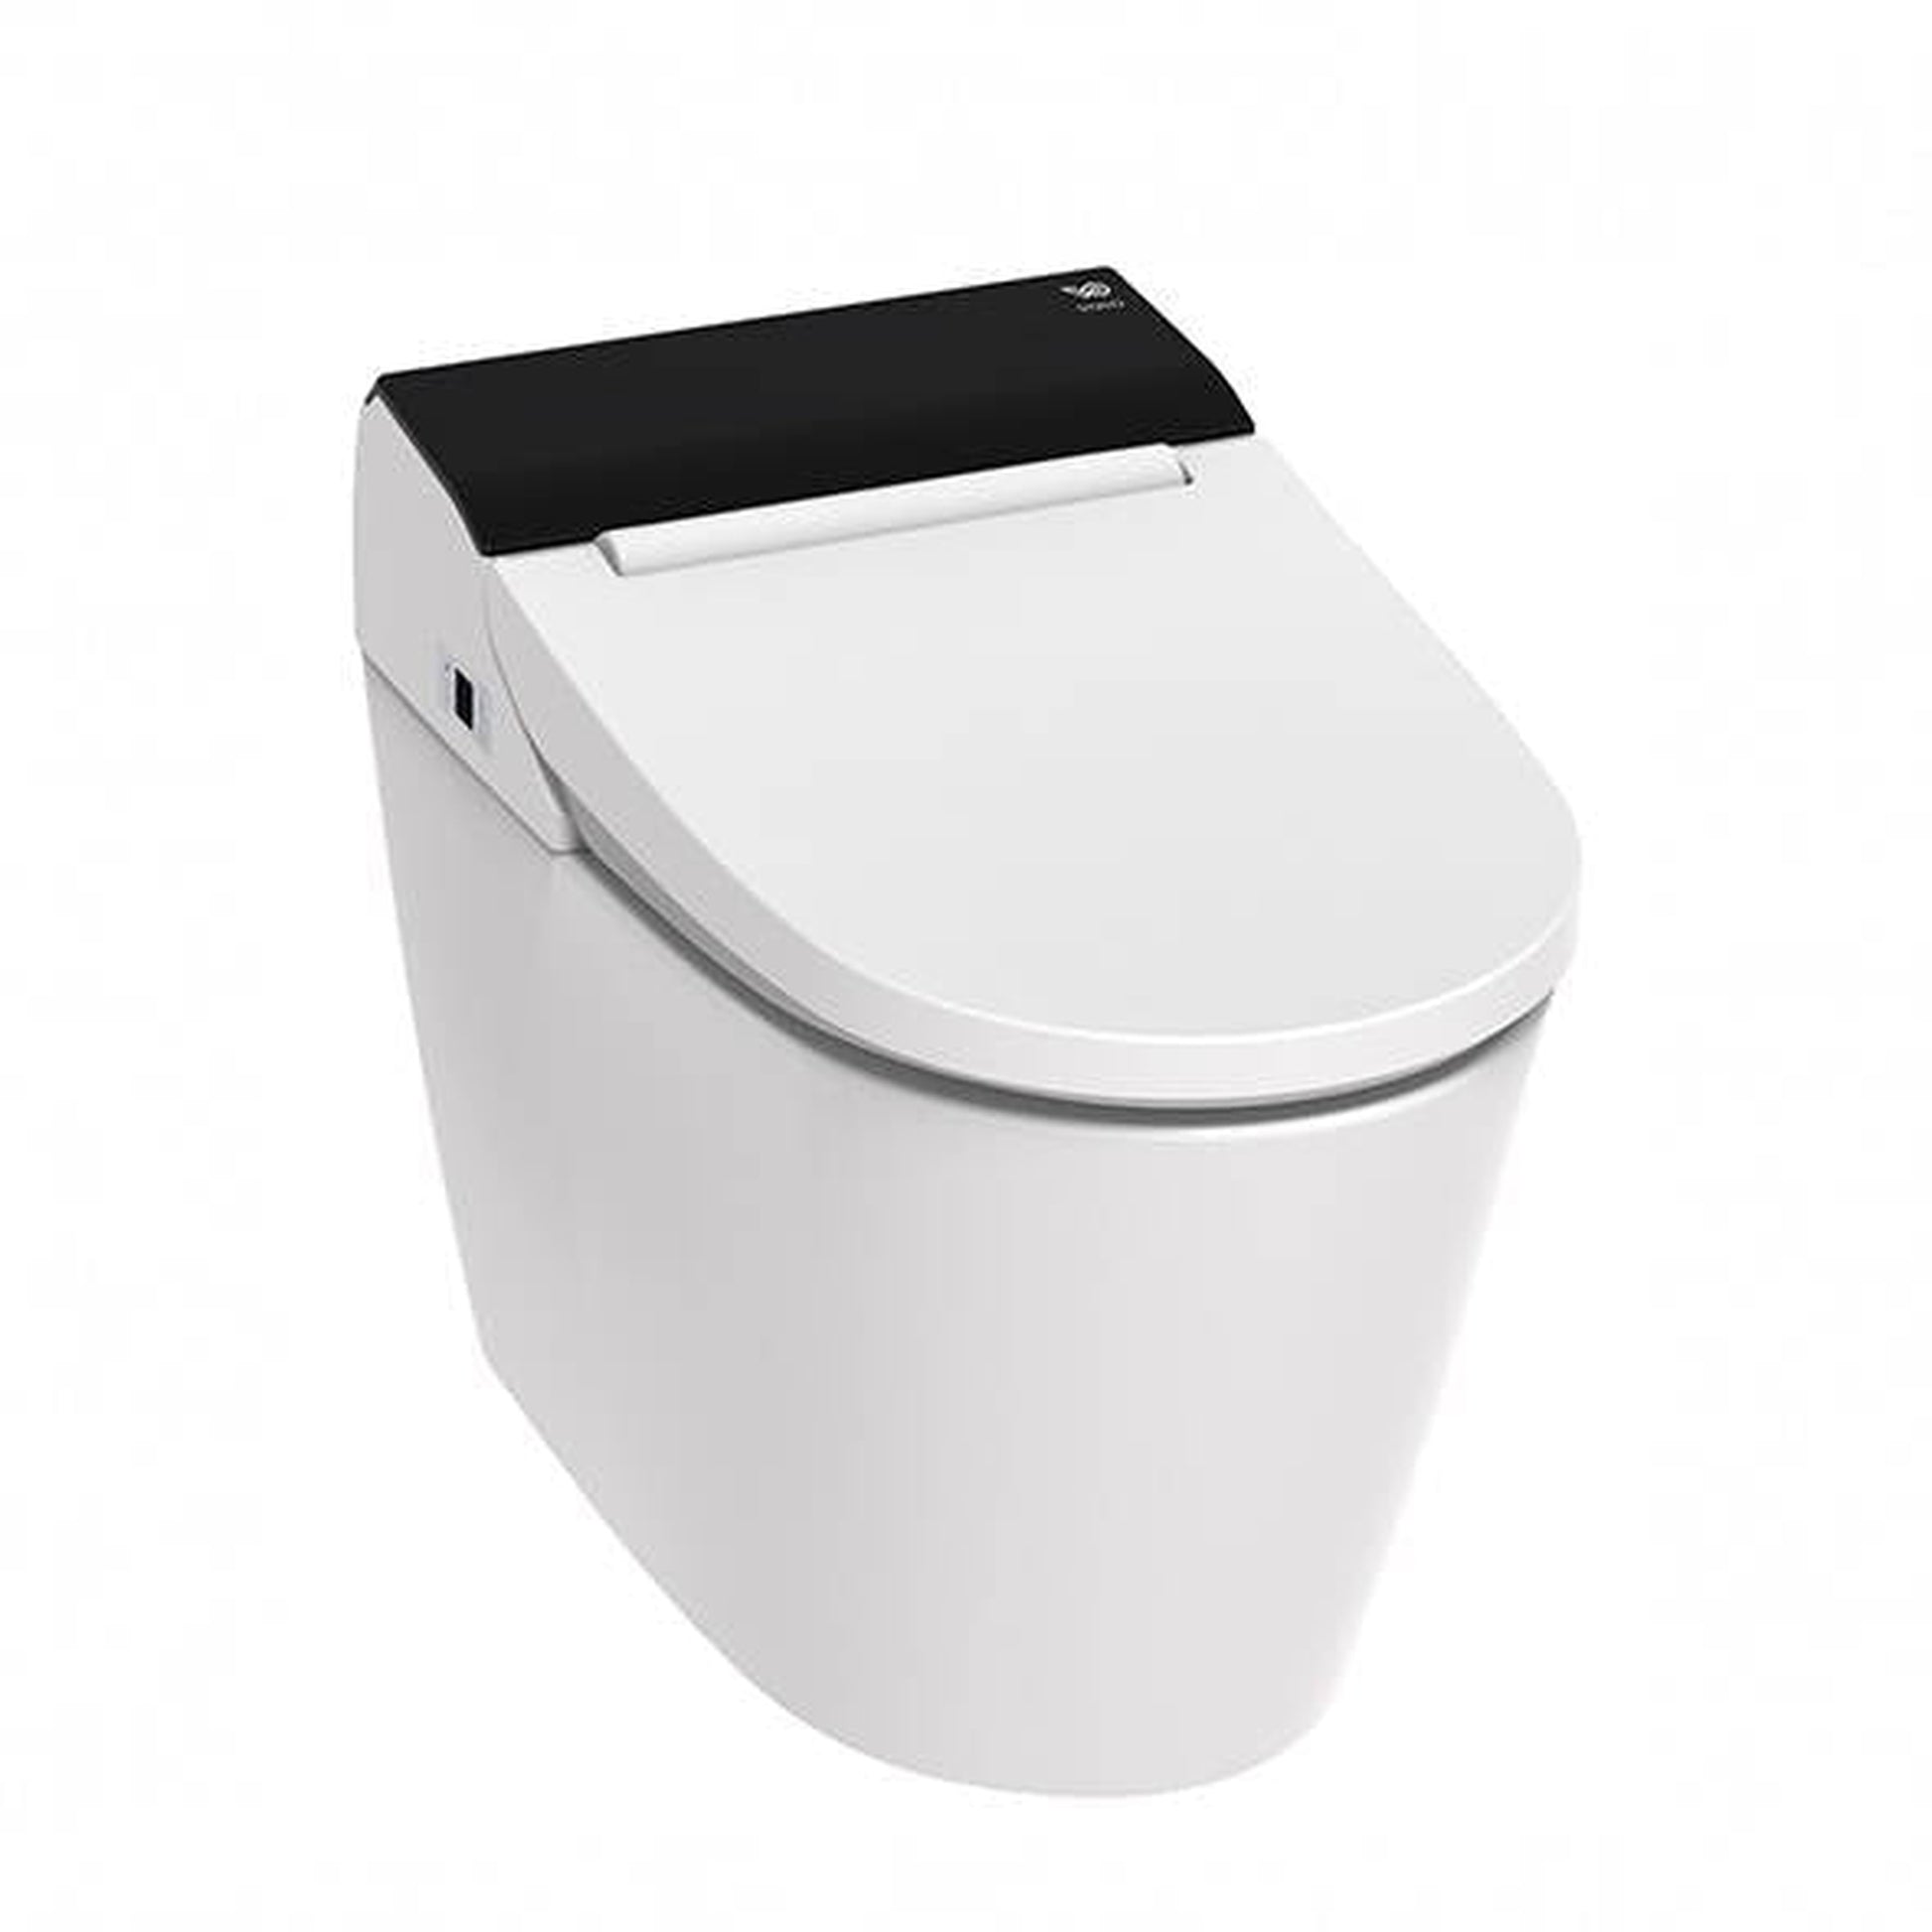 WELLFOR Silver Toilet Mounted Handheld Bidet Sprayer in the